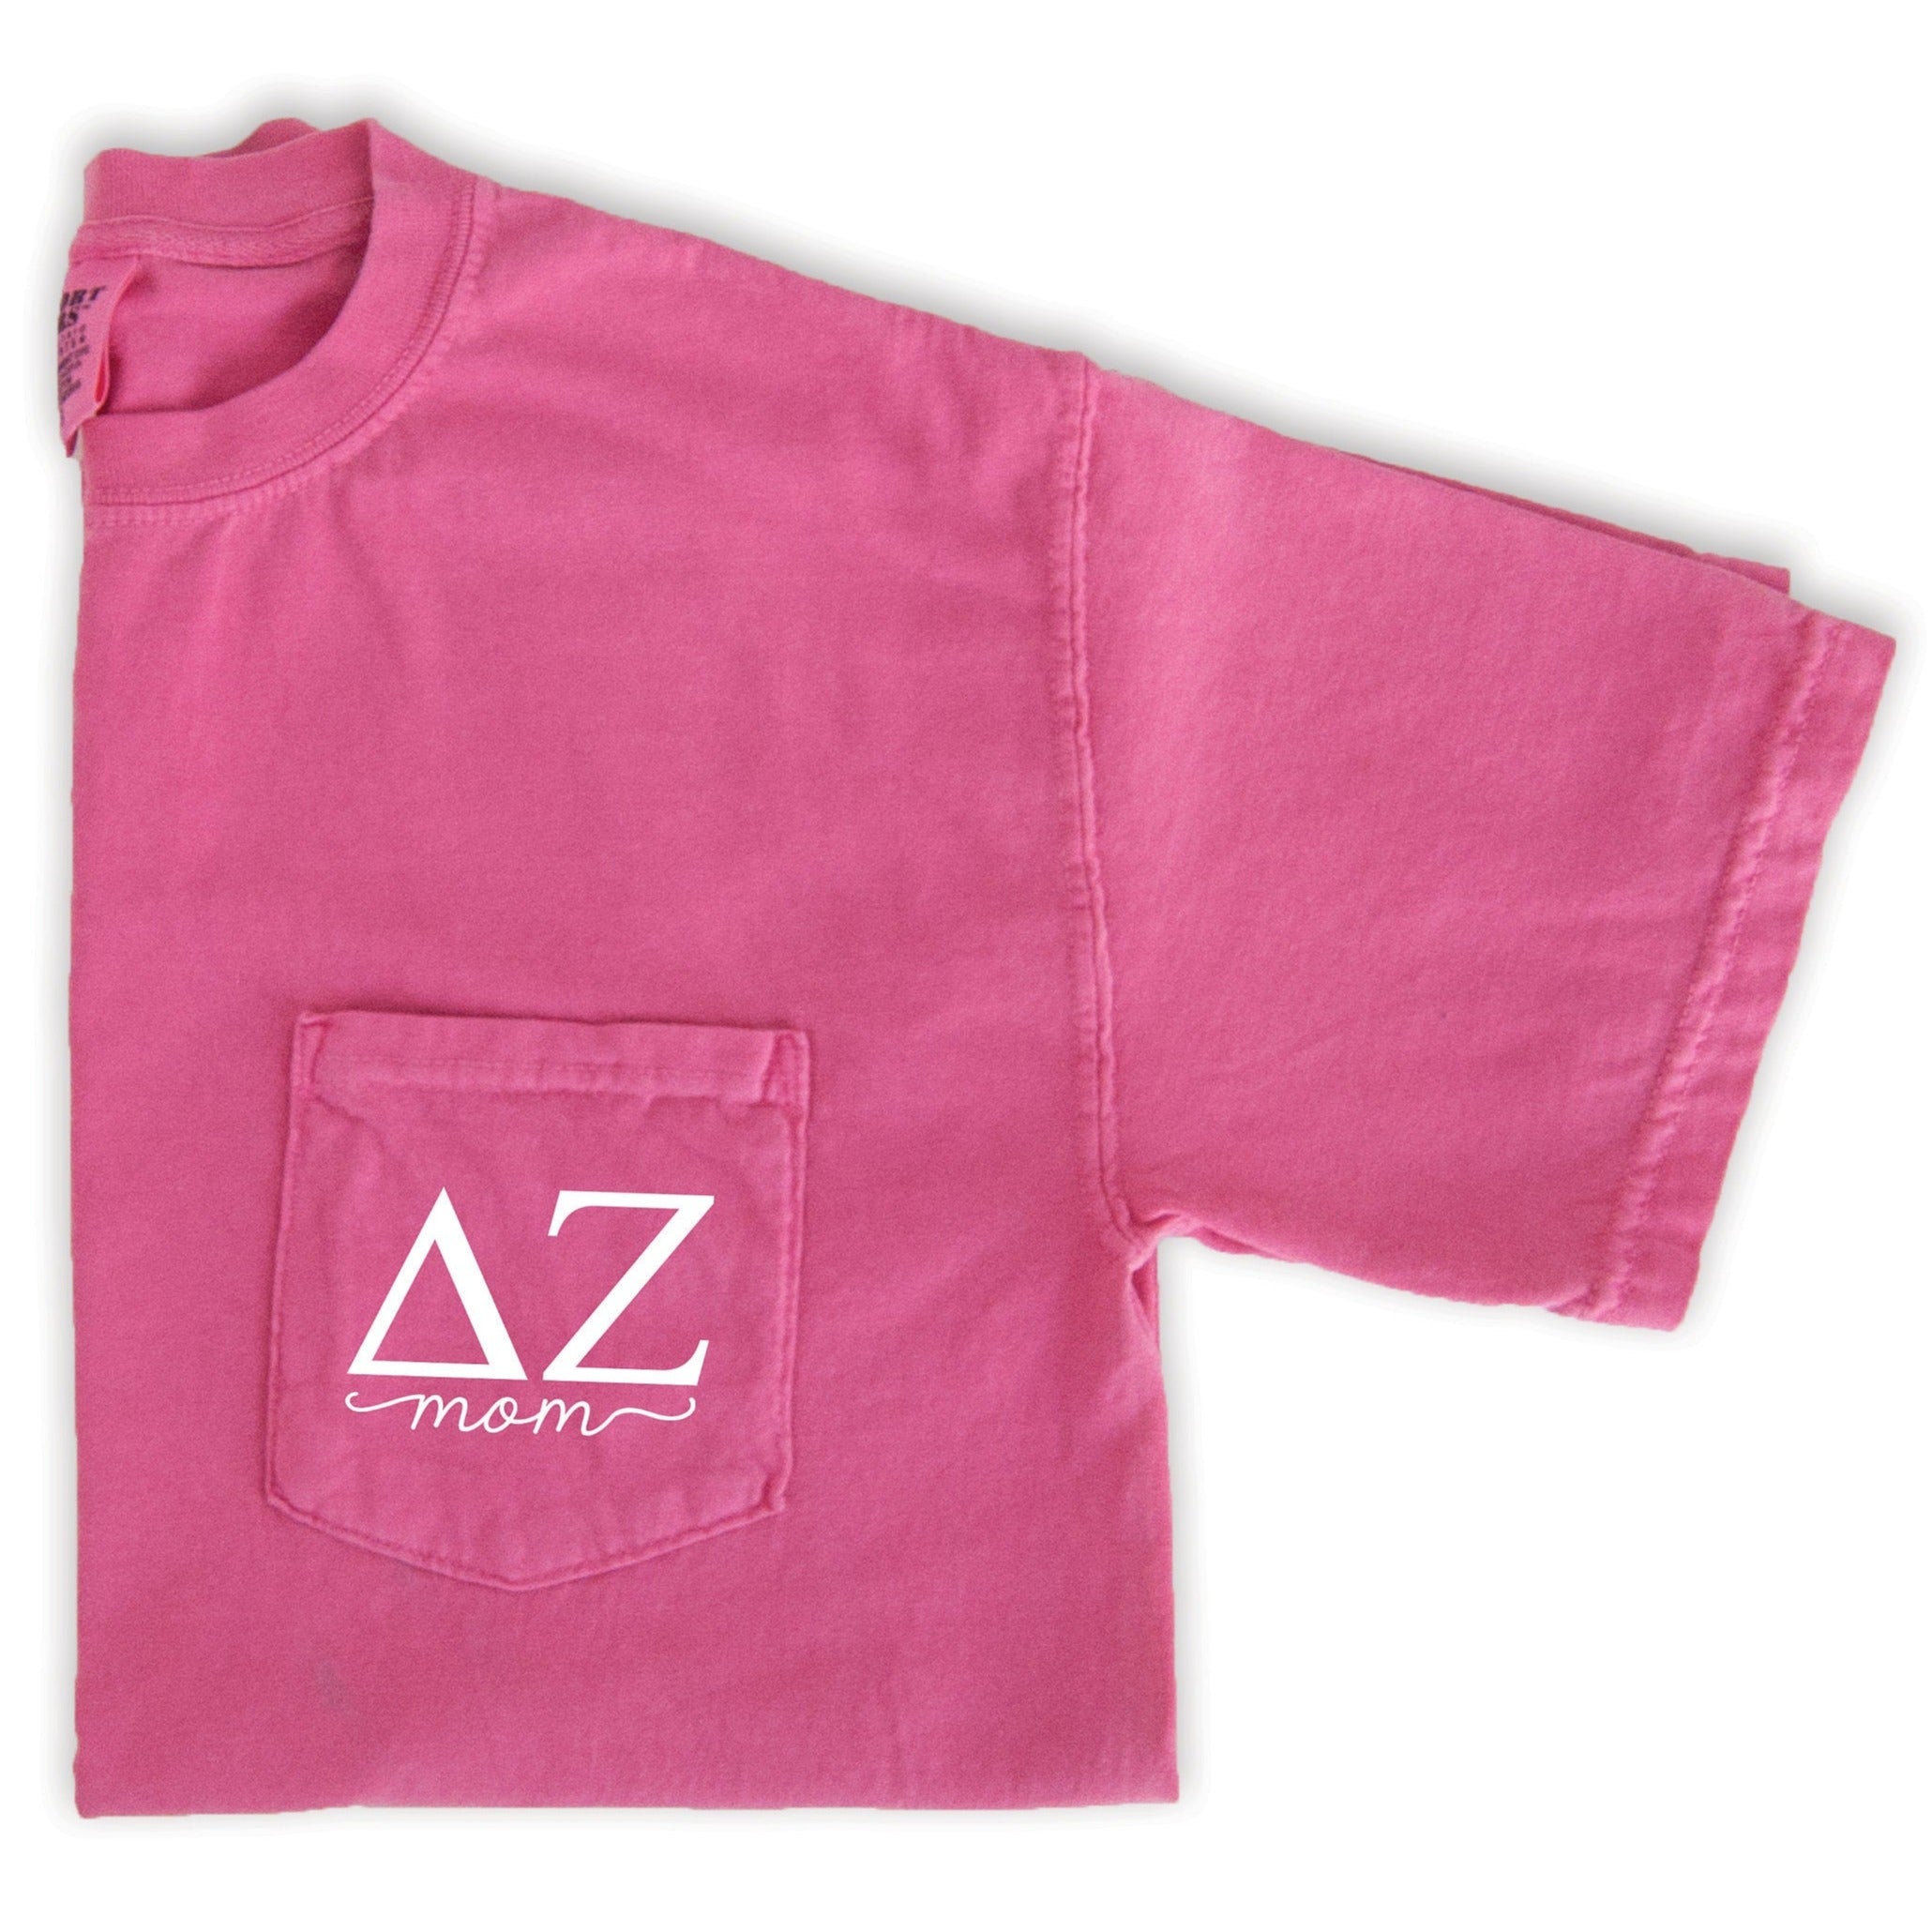 Delta Zeta Mom T-Shirt - Pink - Go Greek Chic